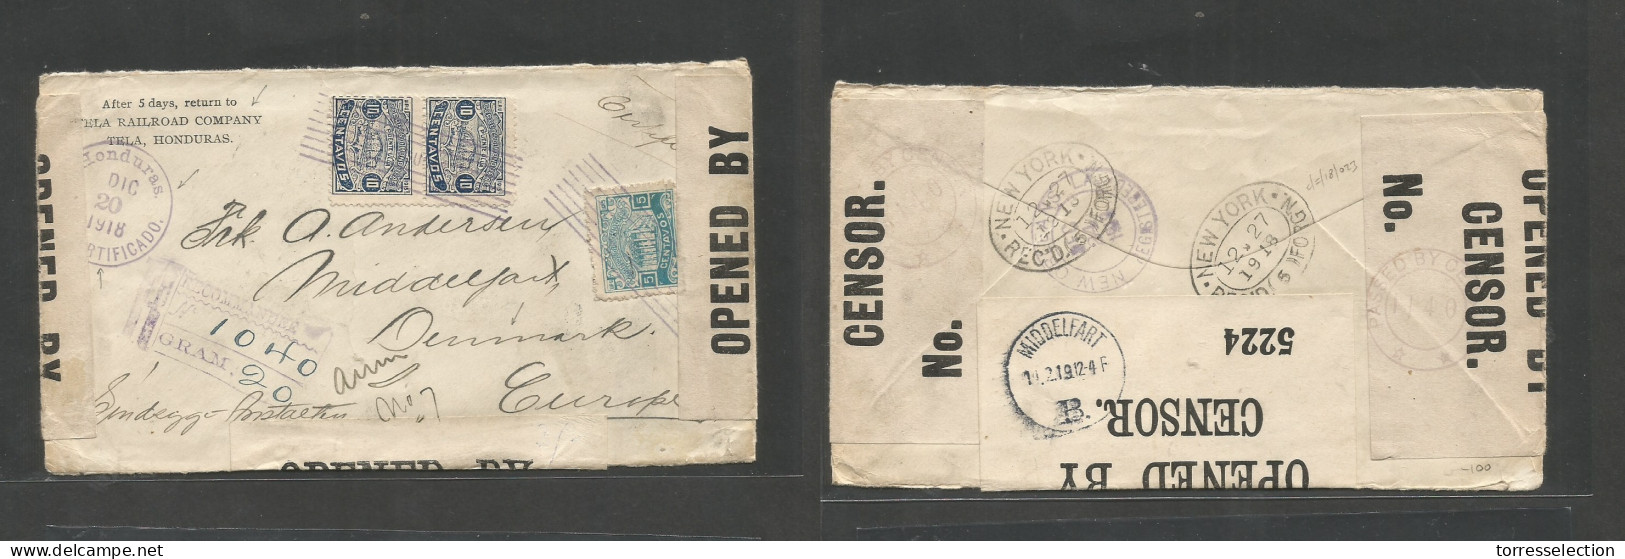 HONDURAS. 1918 (20 Dec) Tela - Denmark, Middelfort (14 Feb) Via NYC. Registered WWI Multifkd Censored (3 Label Seals) En - Honduras